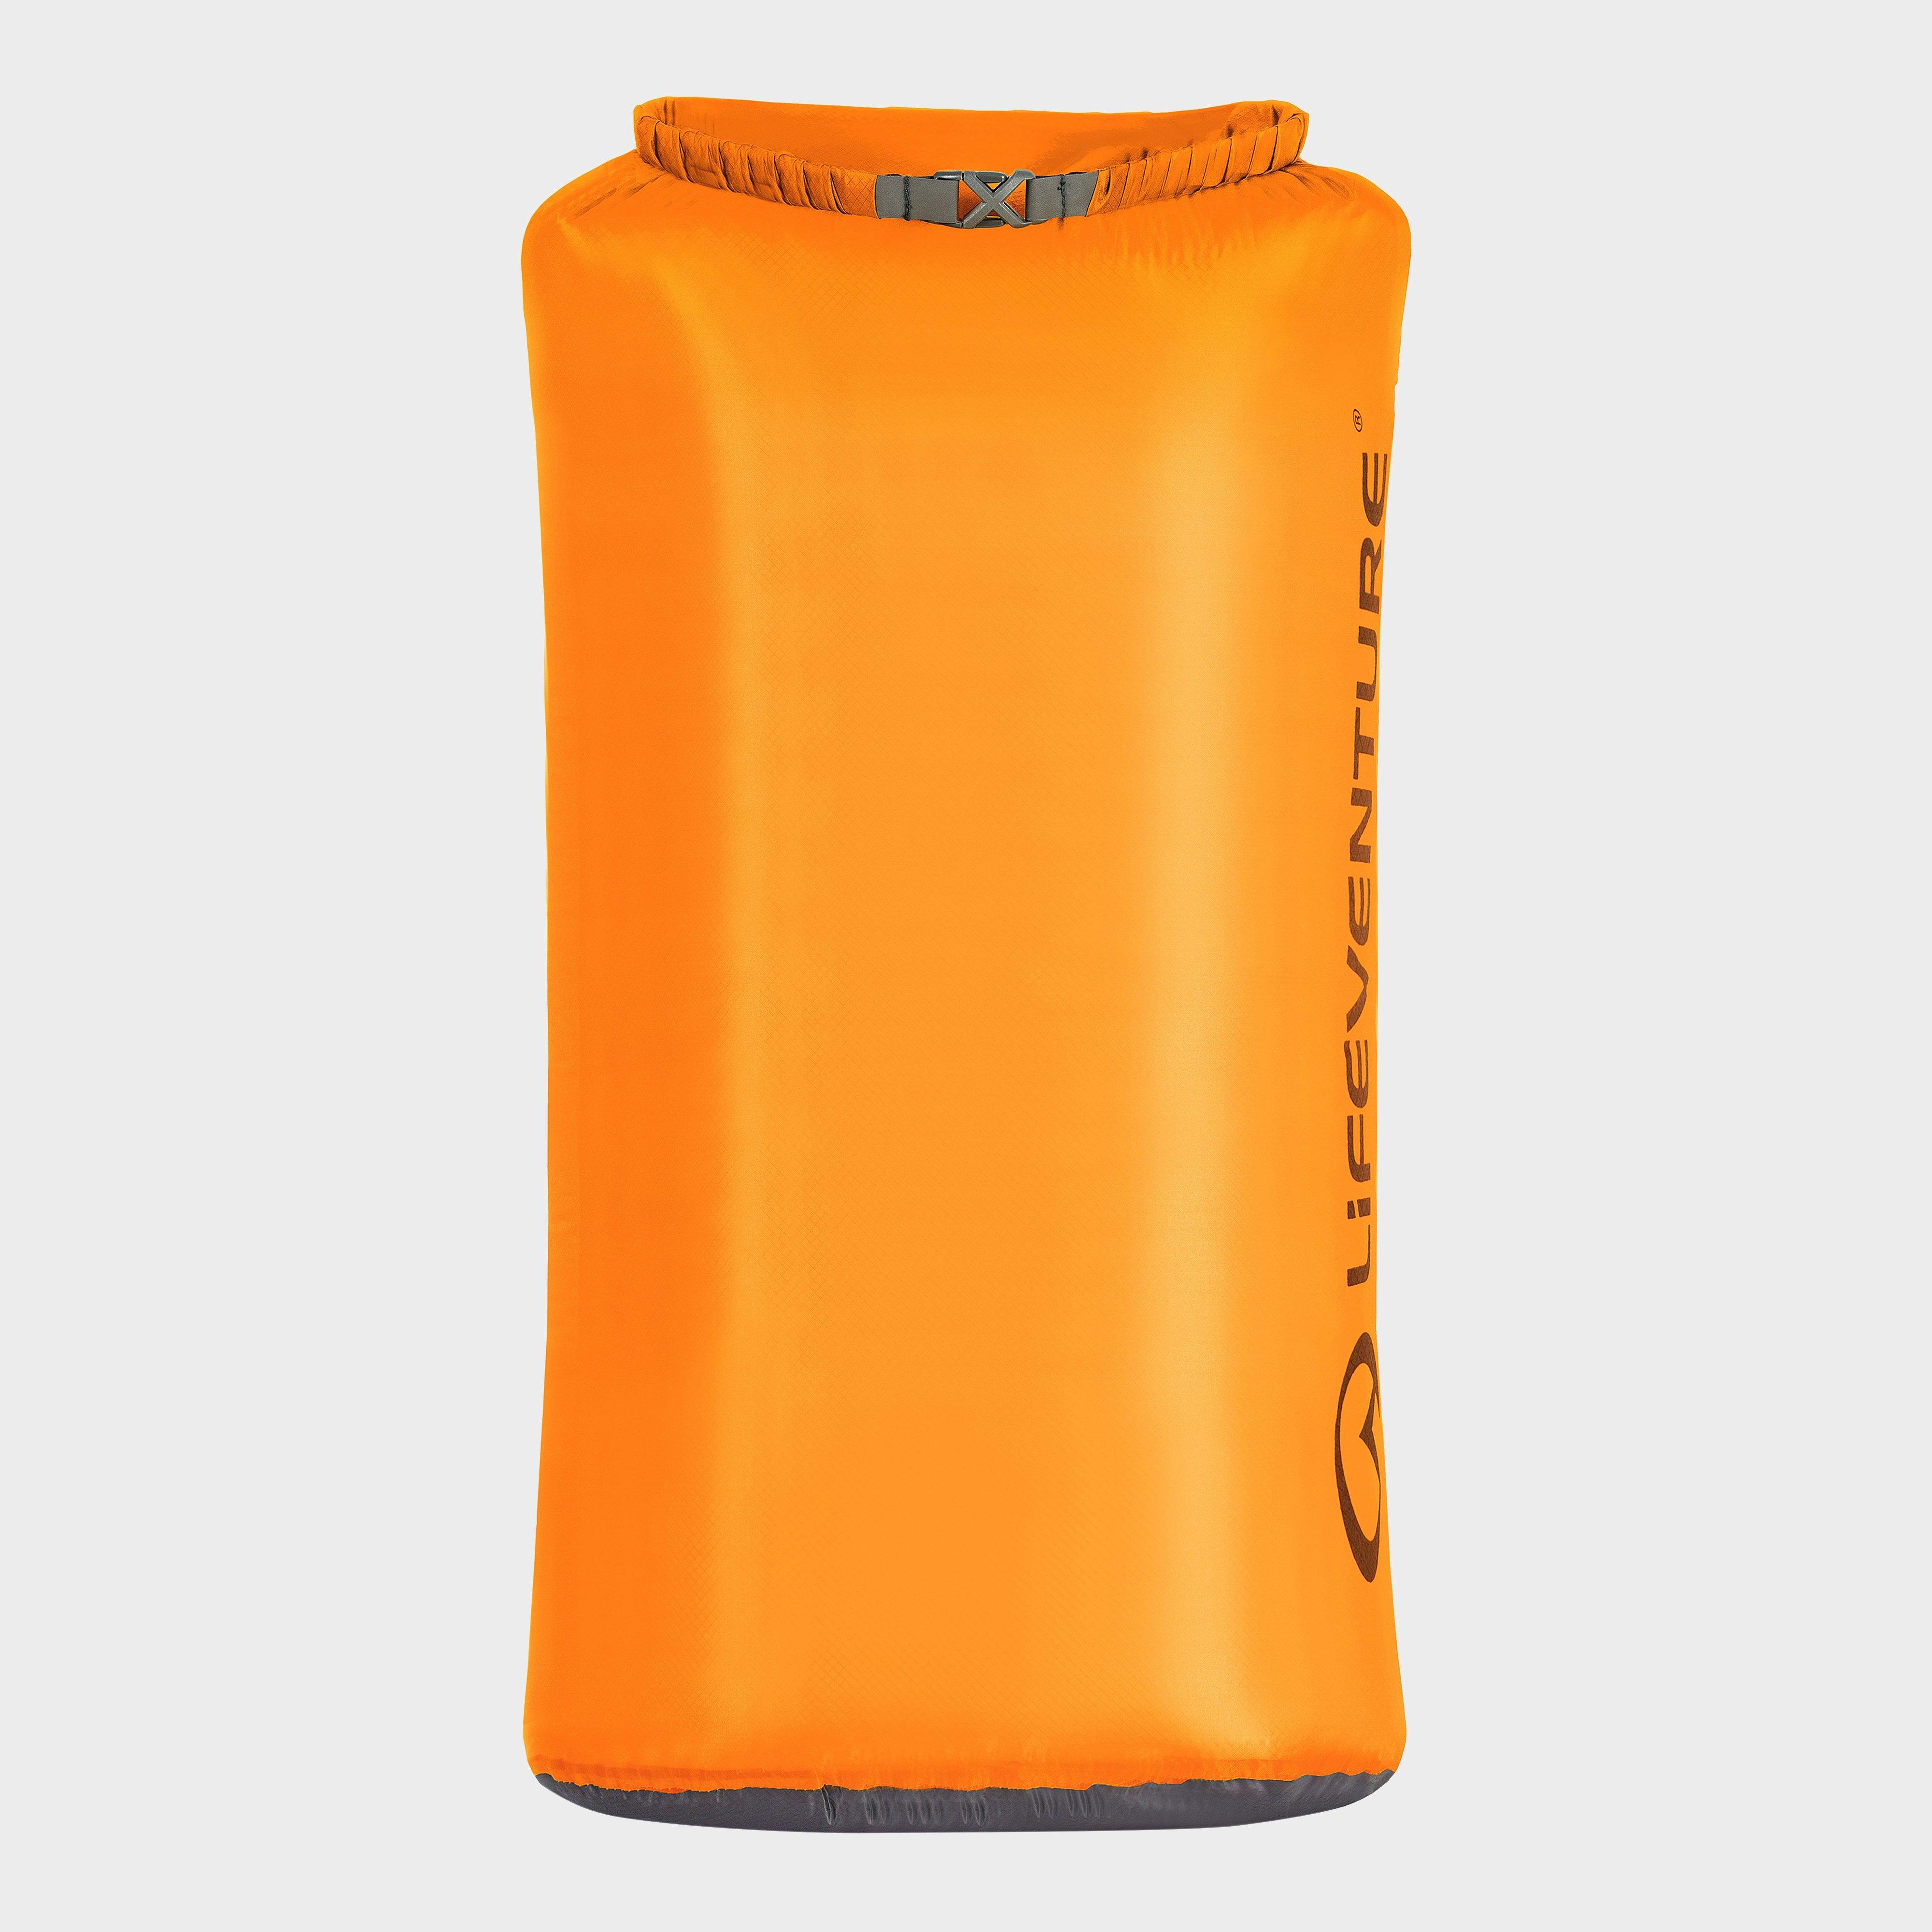 Lifeventure Ultralight 75l Dry Bag - Orange/blk/c.gld/wht  Orange/blk/c.gld/wht